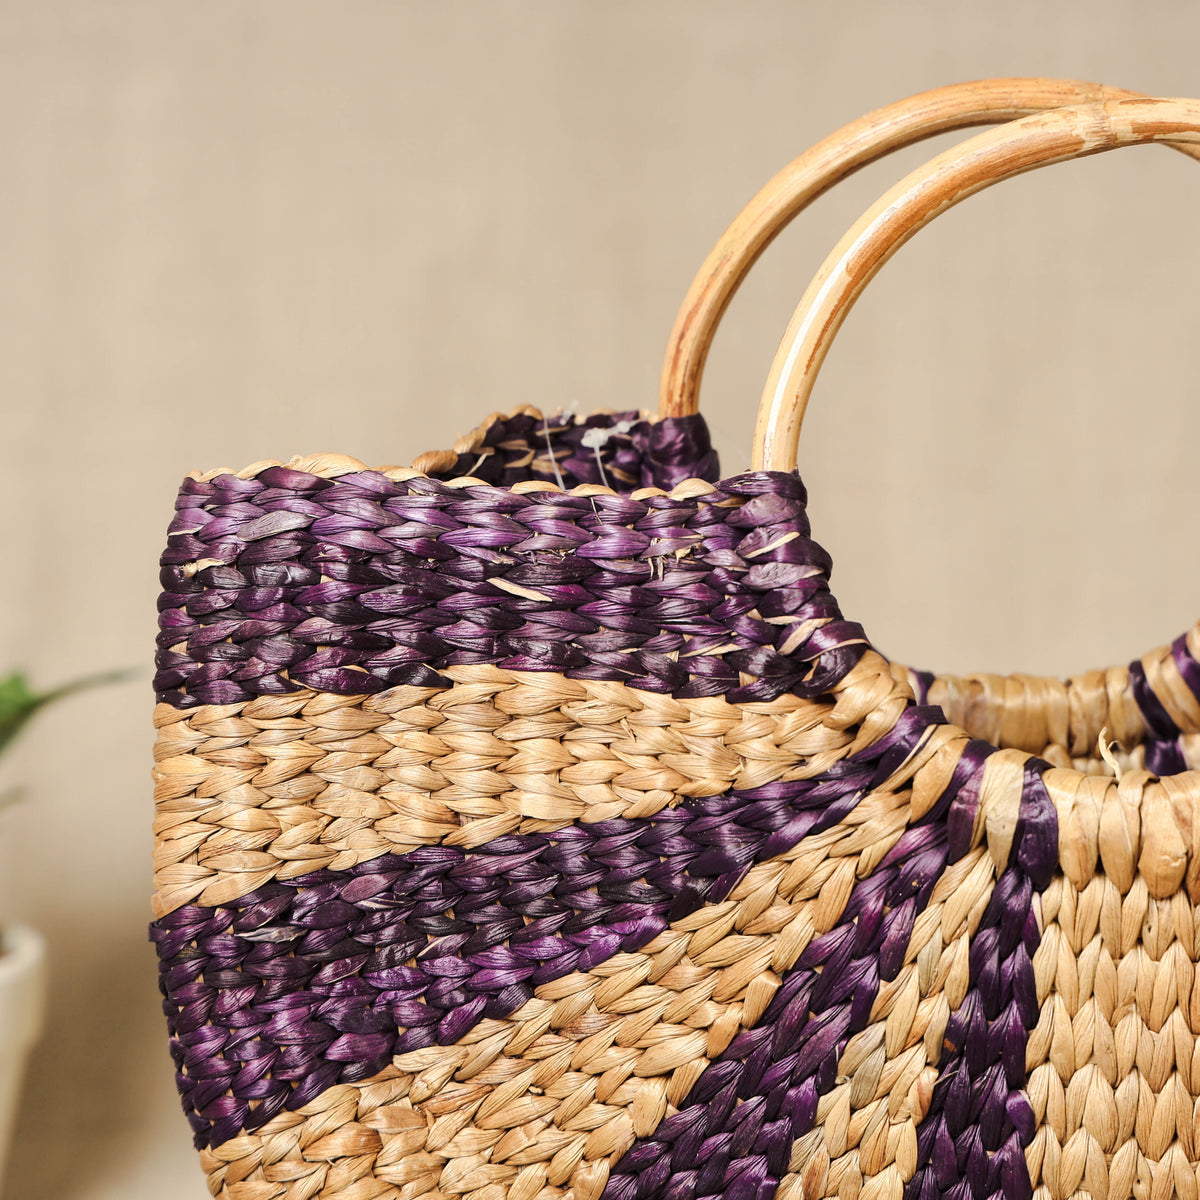 Handmade Organic Water Hyacinth Hand Bag from Assam